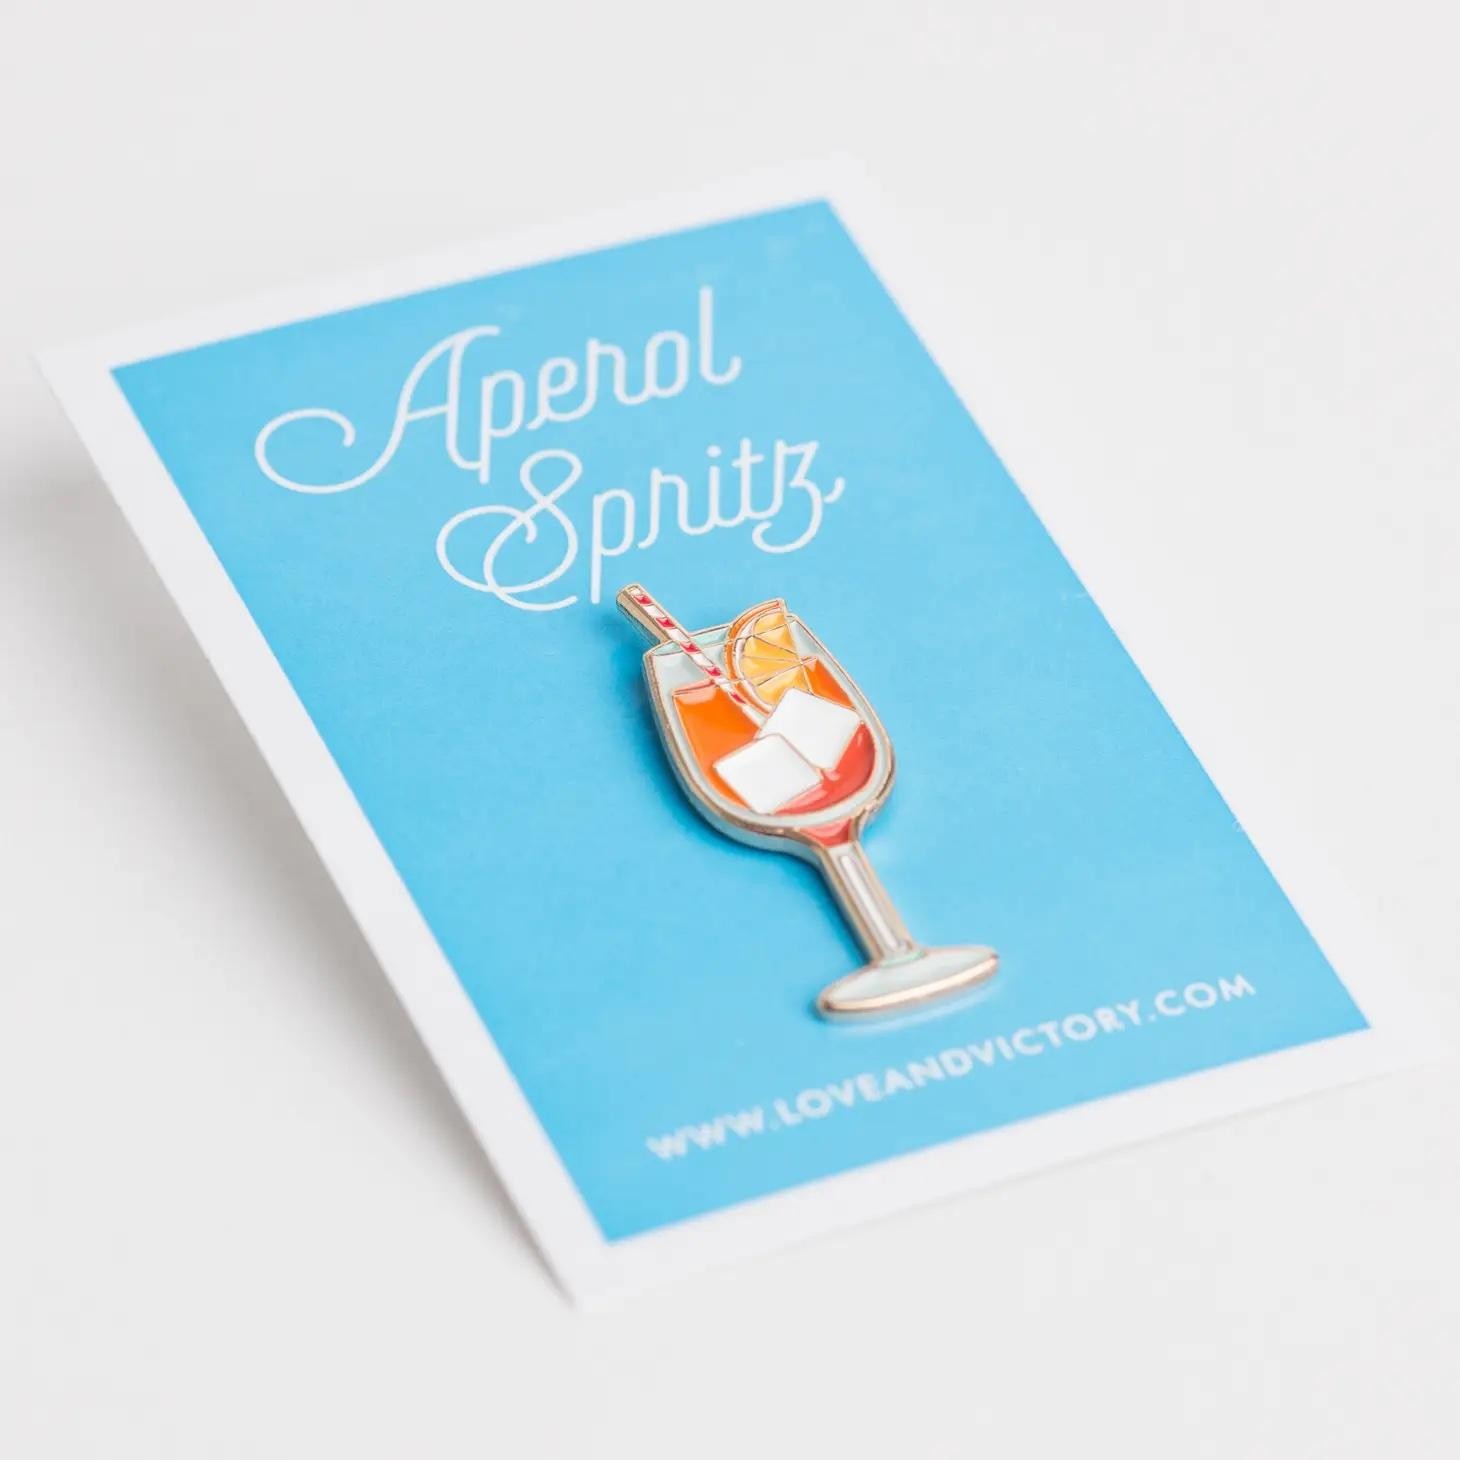 LOV Aperol spritz cocktail pin